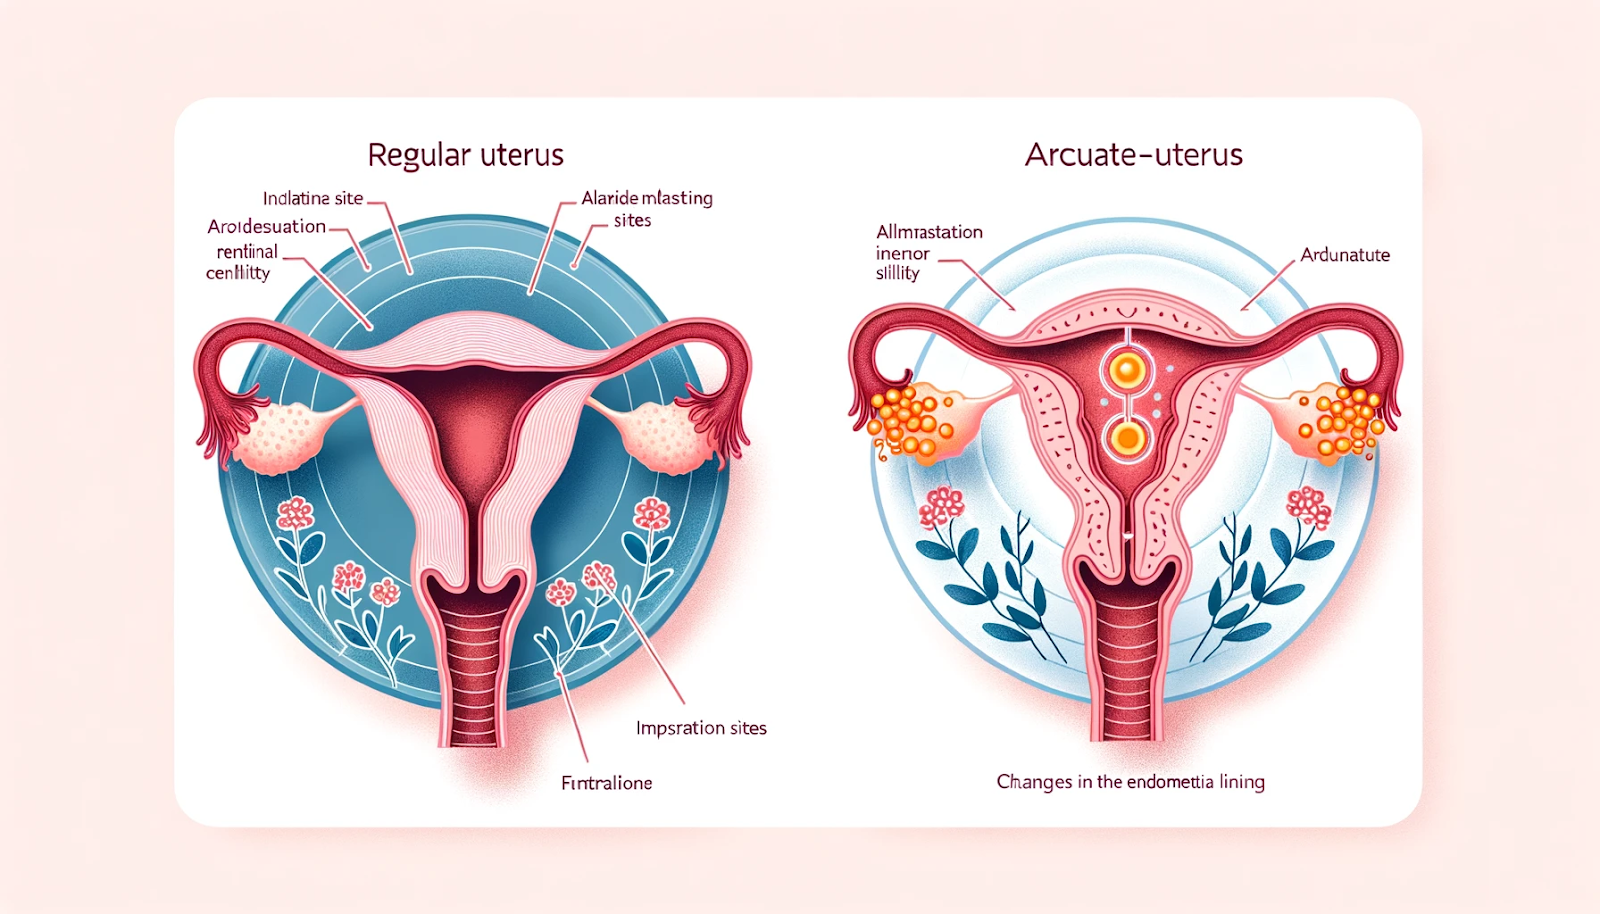 Arcuate Uterus Affect Fertility and Conception